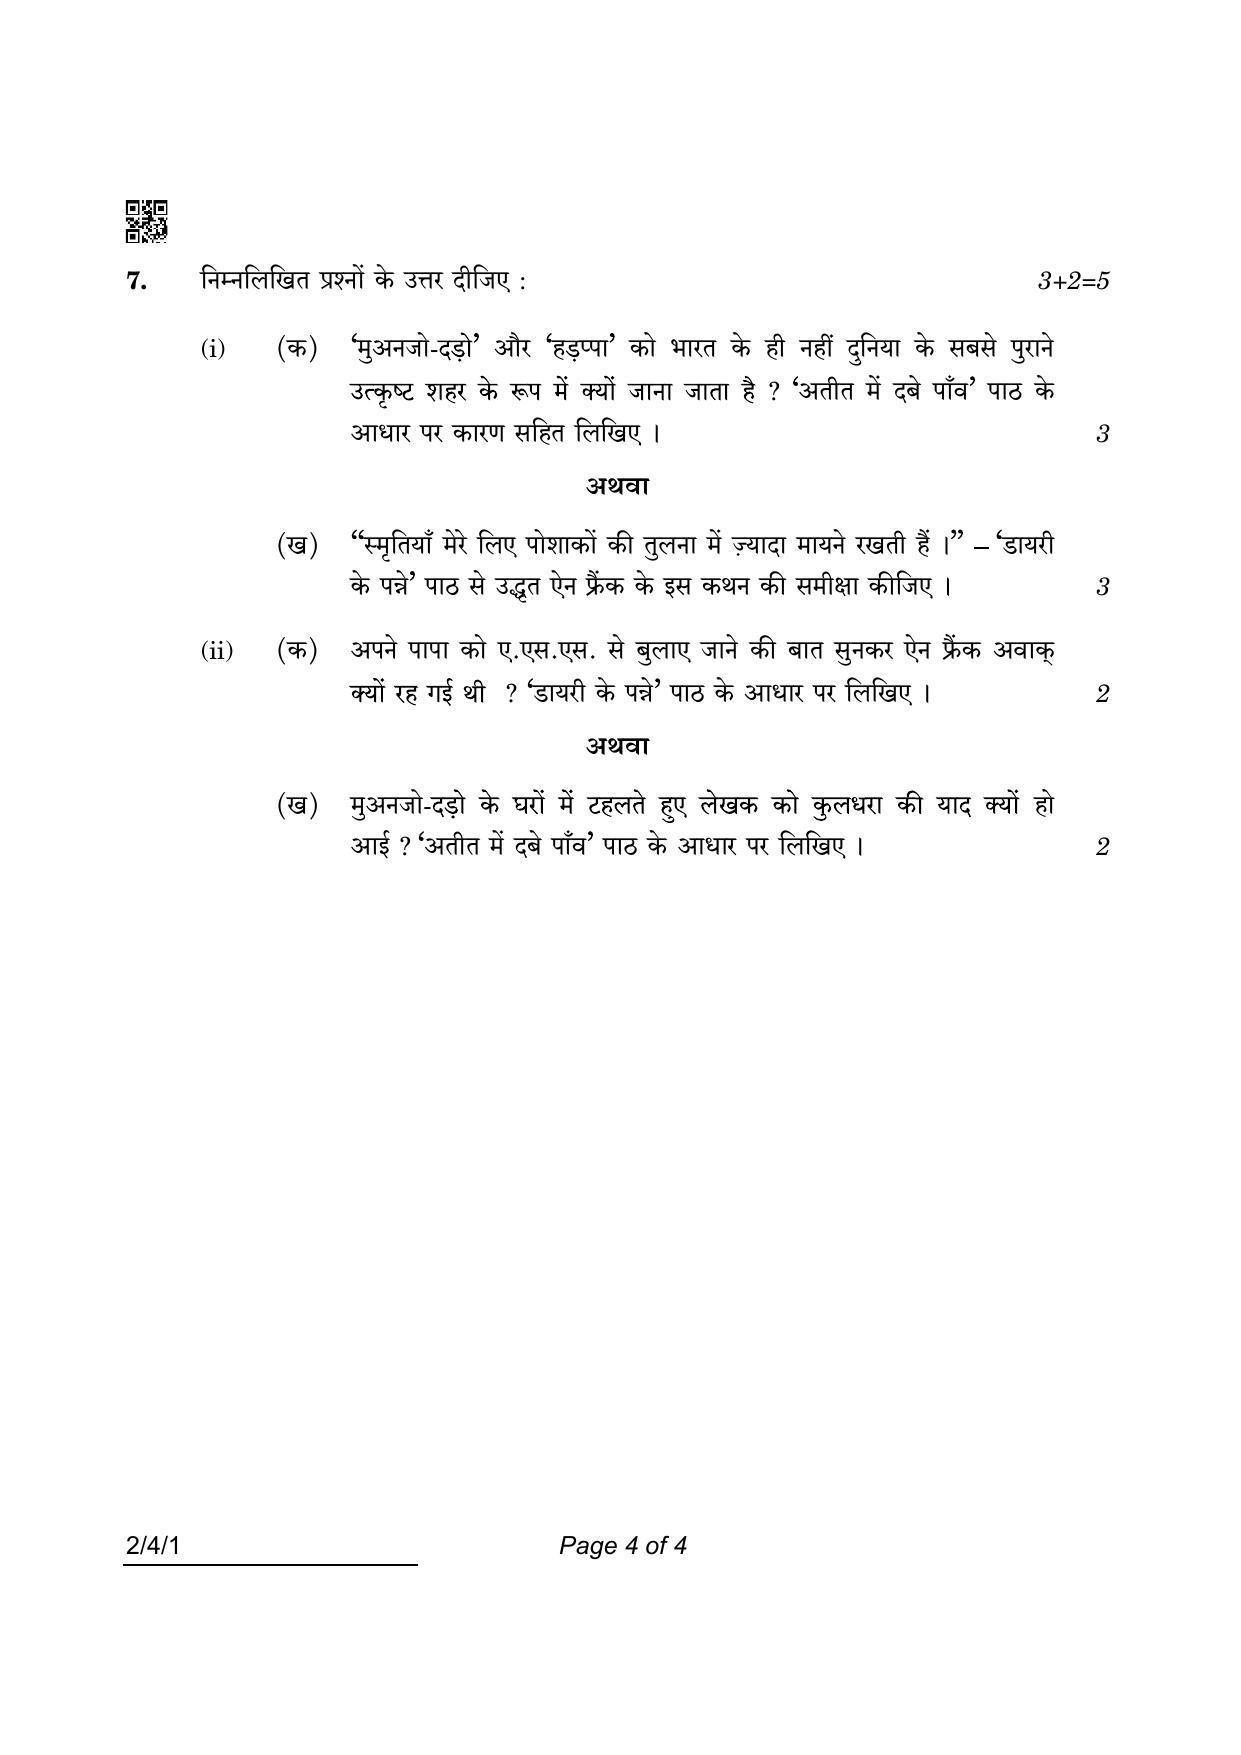 CBSE Class 12 2-4-1 Hindi Core 2022 Question Paper - Page 4